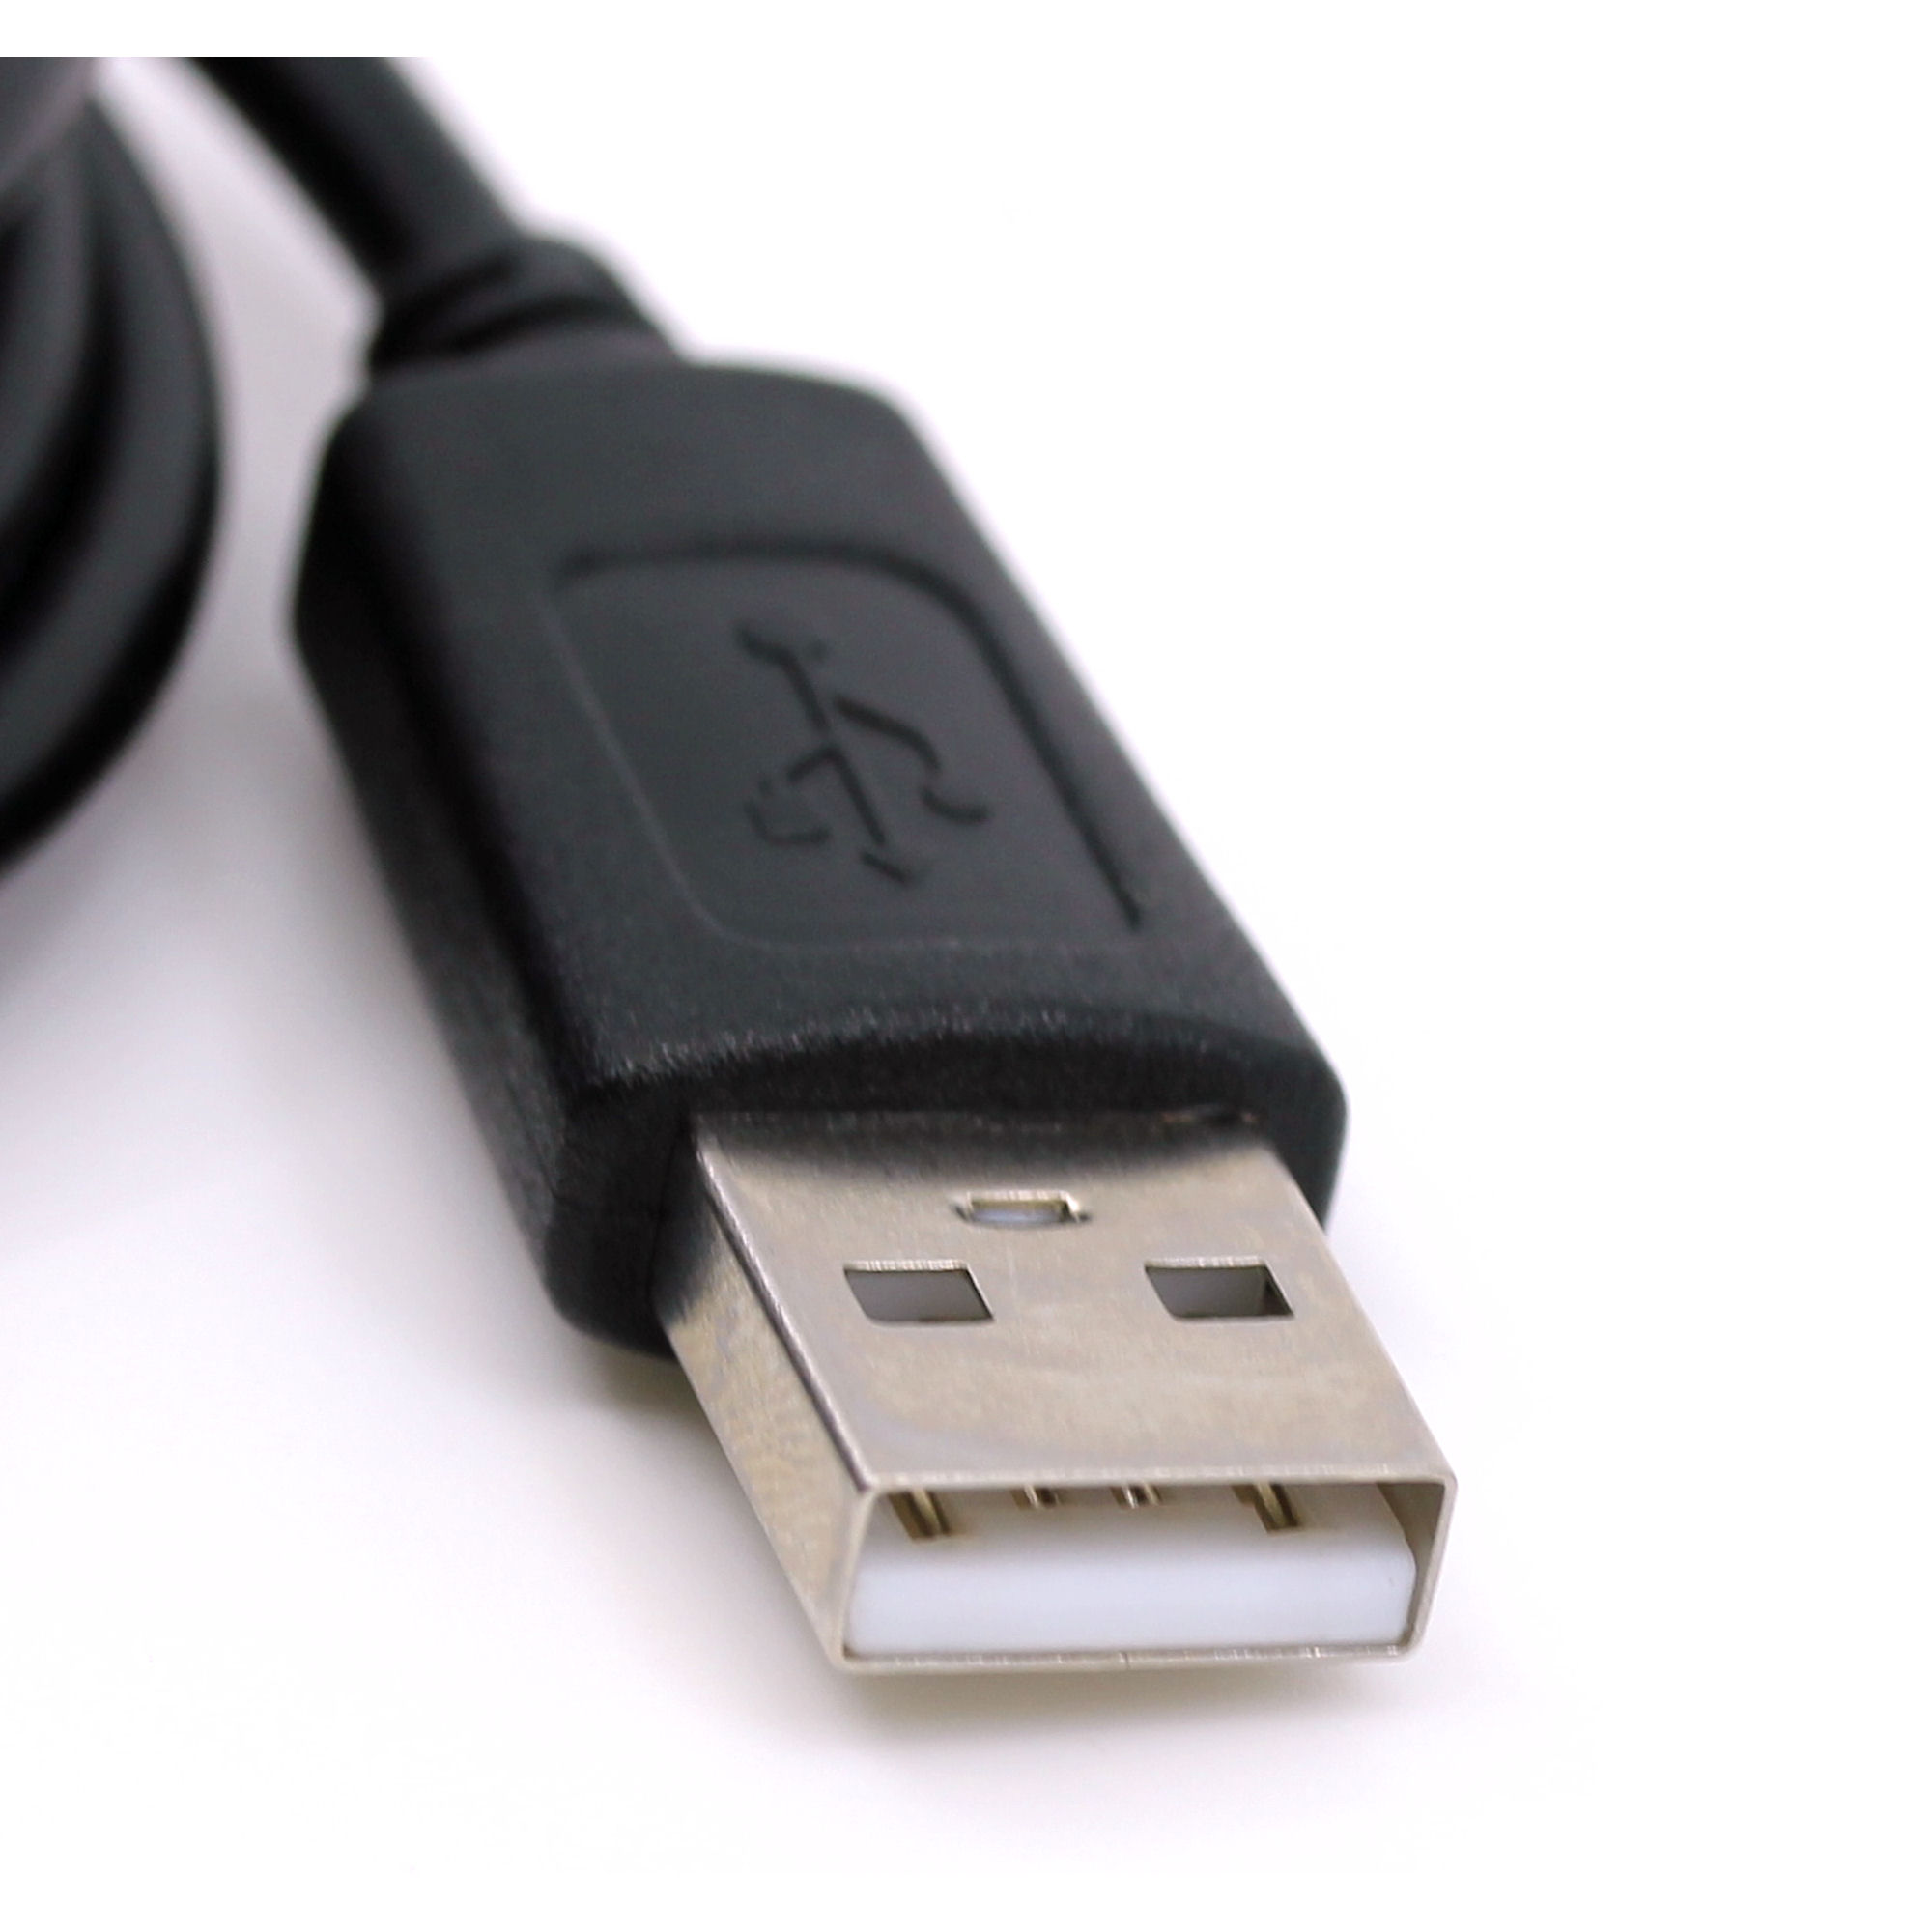 USB Datenkabel für Canon Digital IXUS 1000, 1000HS, 132, 135, 800, 800 is, 82, 860 is, 870 is, 900